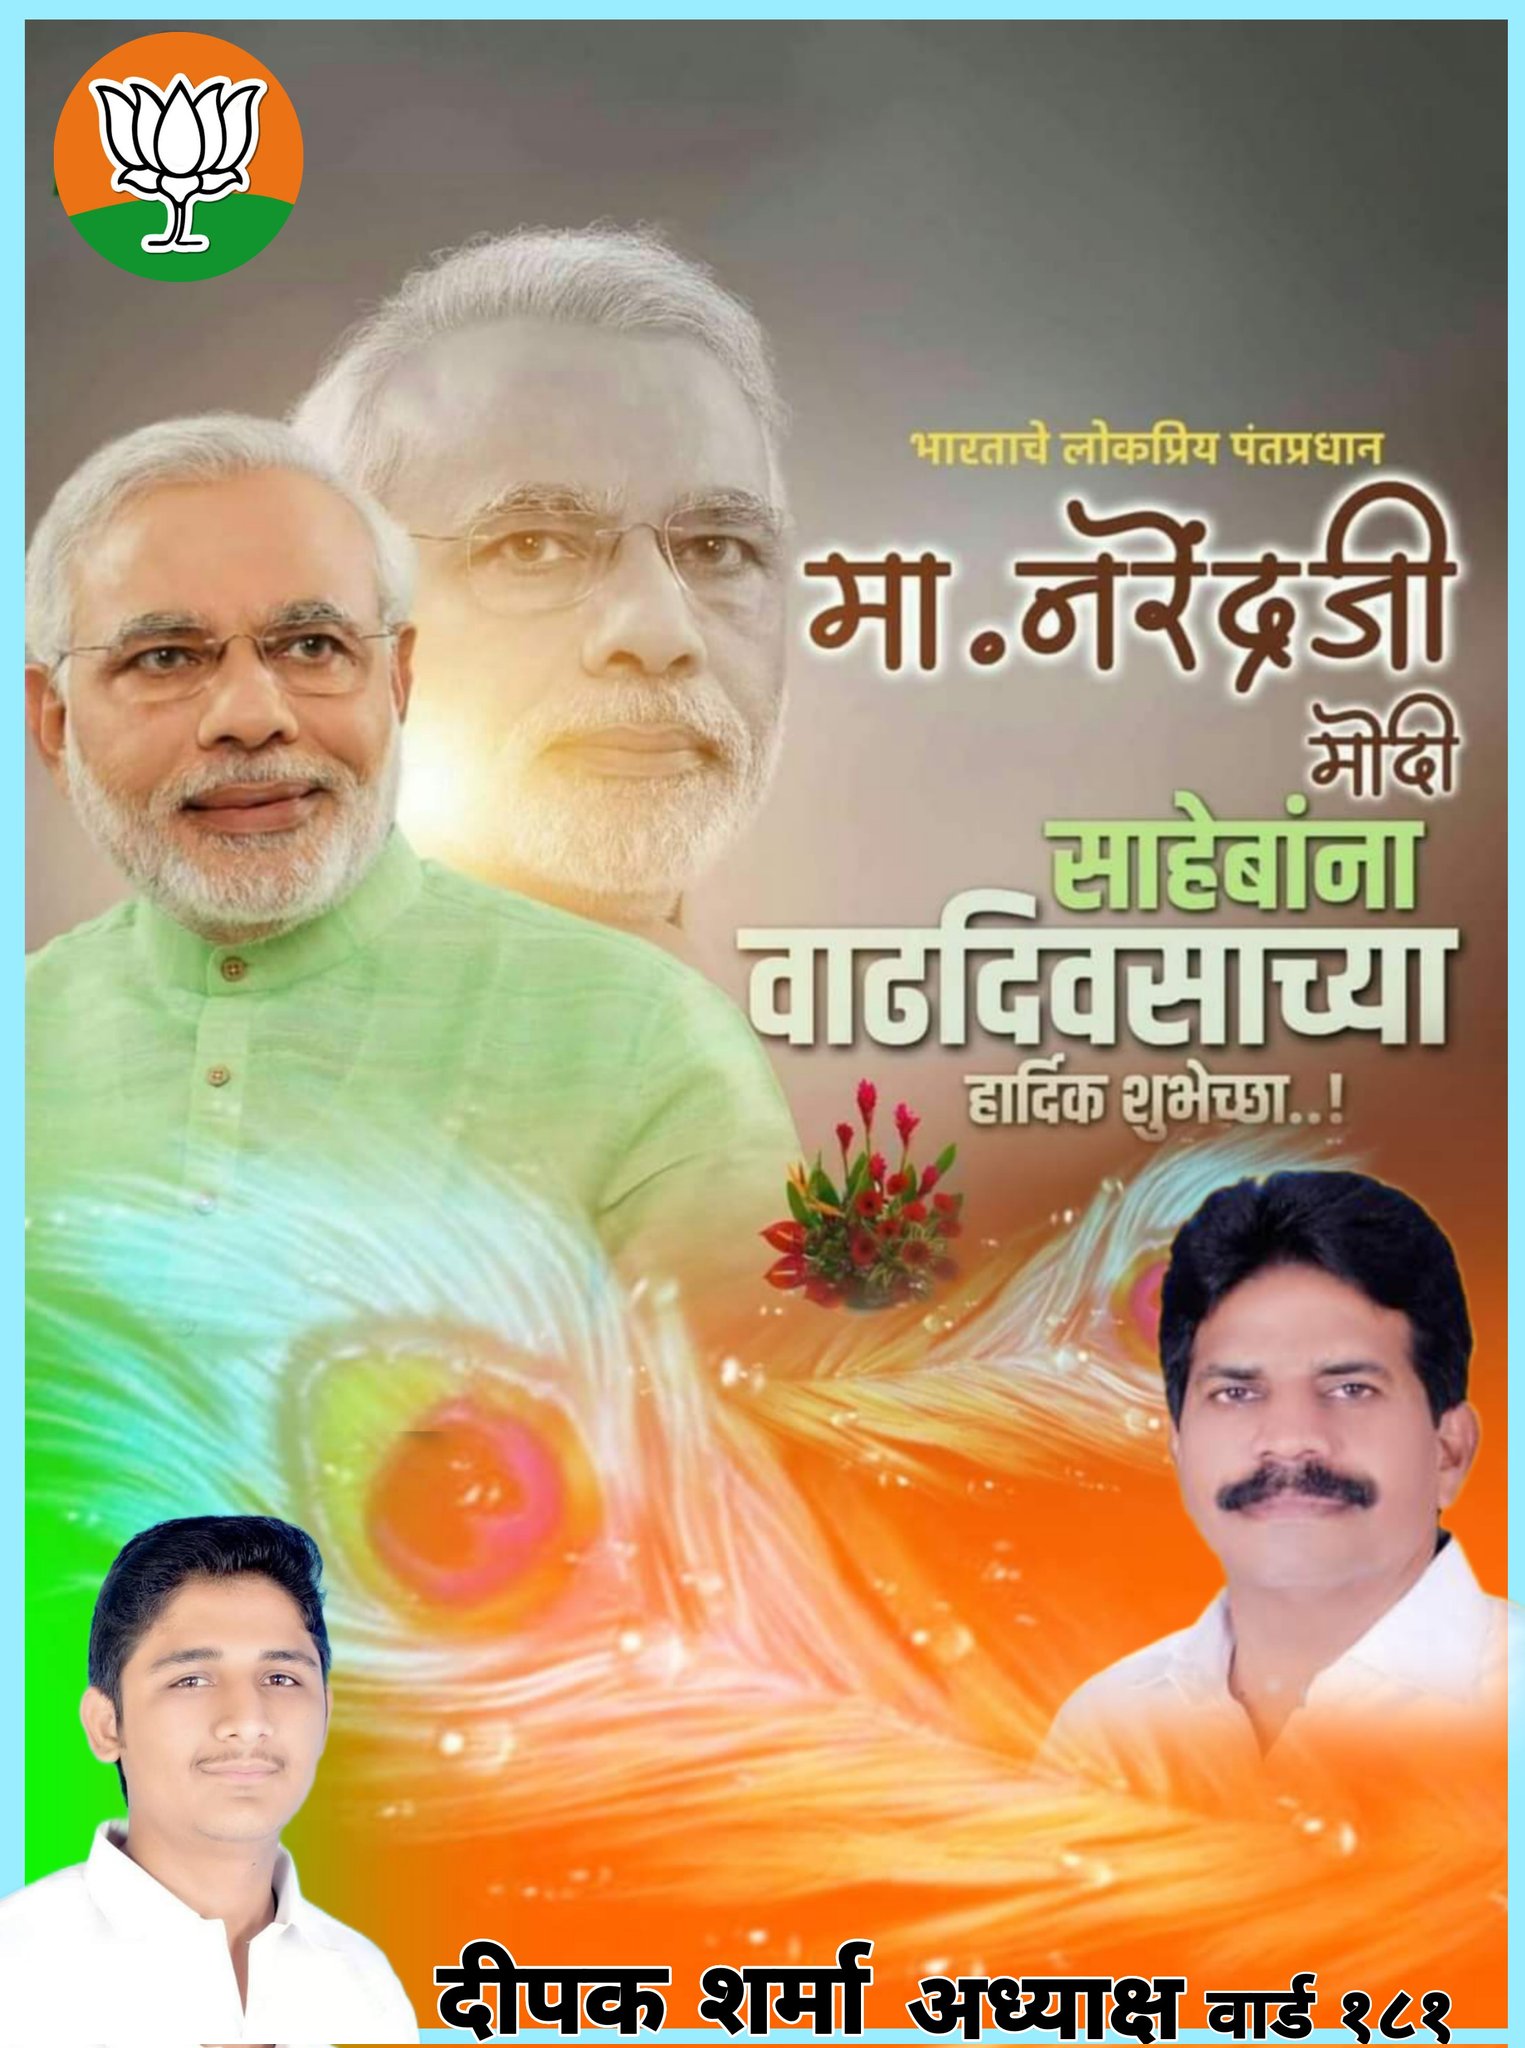 Wishing a Very very happy birthday to our beloved prime minister Shri Narendra Modi ji  